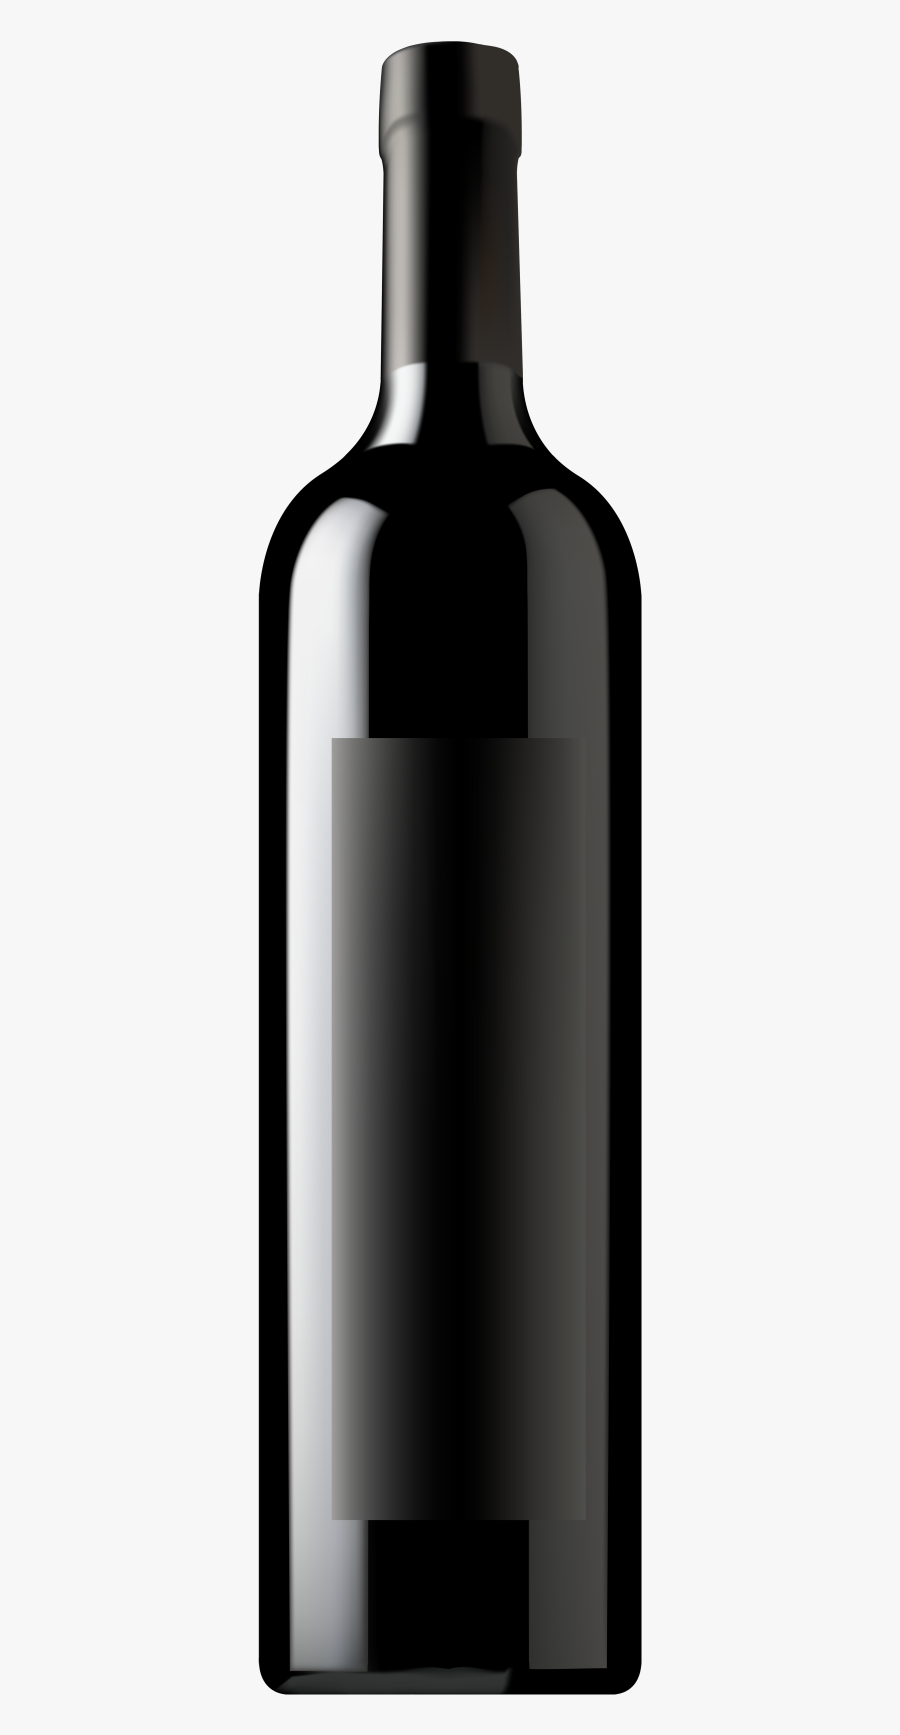 Black Wine Bottle Png, Transparent Clipart